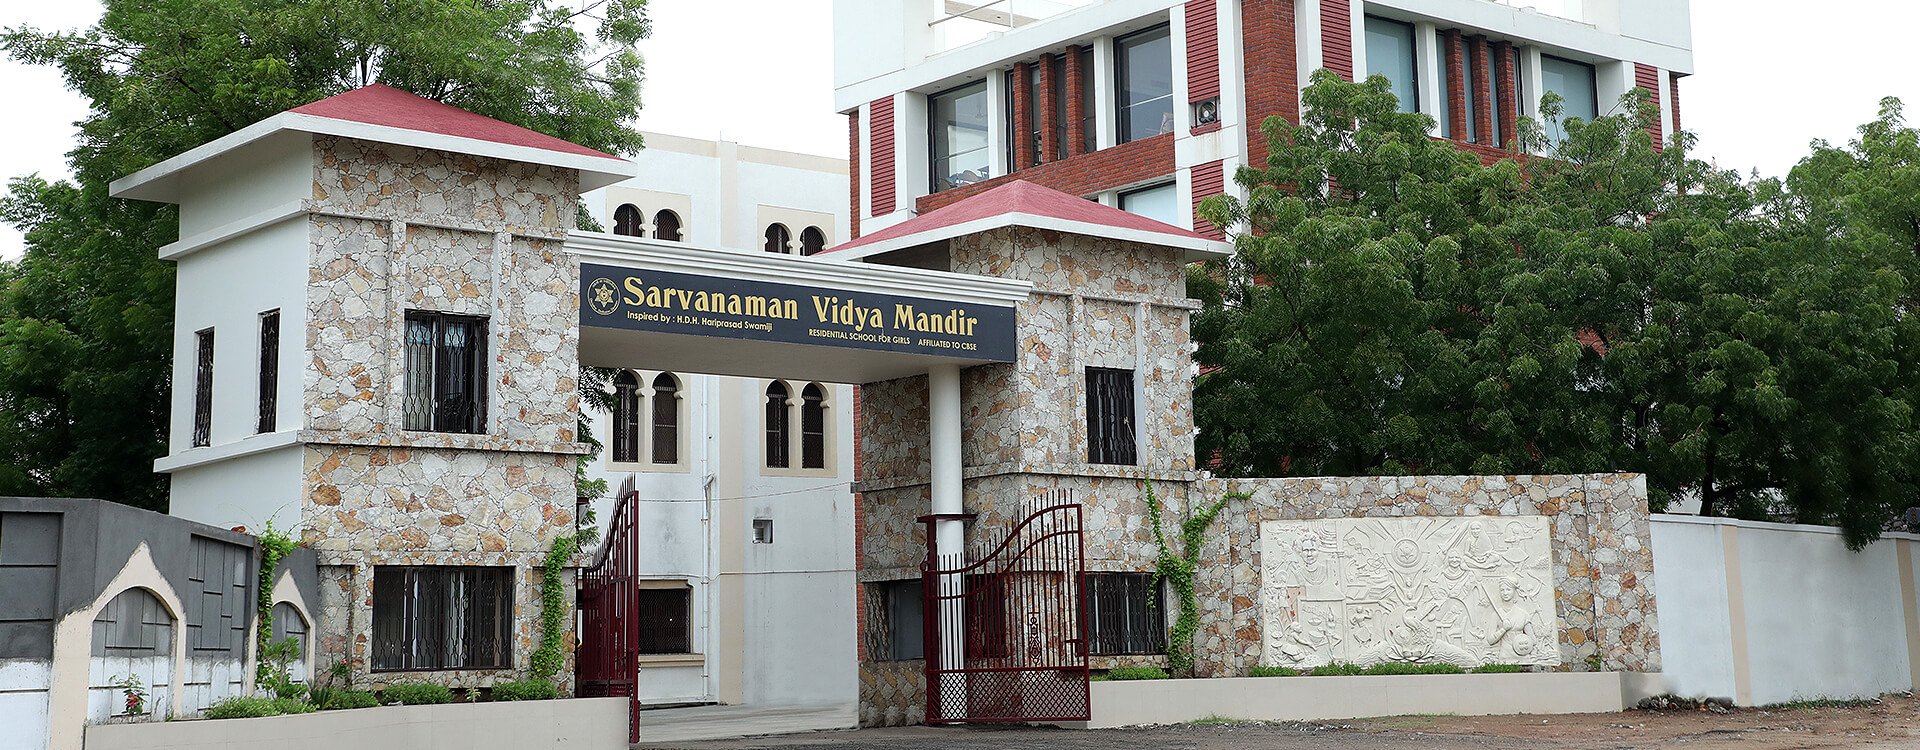 Sarvanaman Vidya Mandir|Colleges|Education